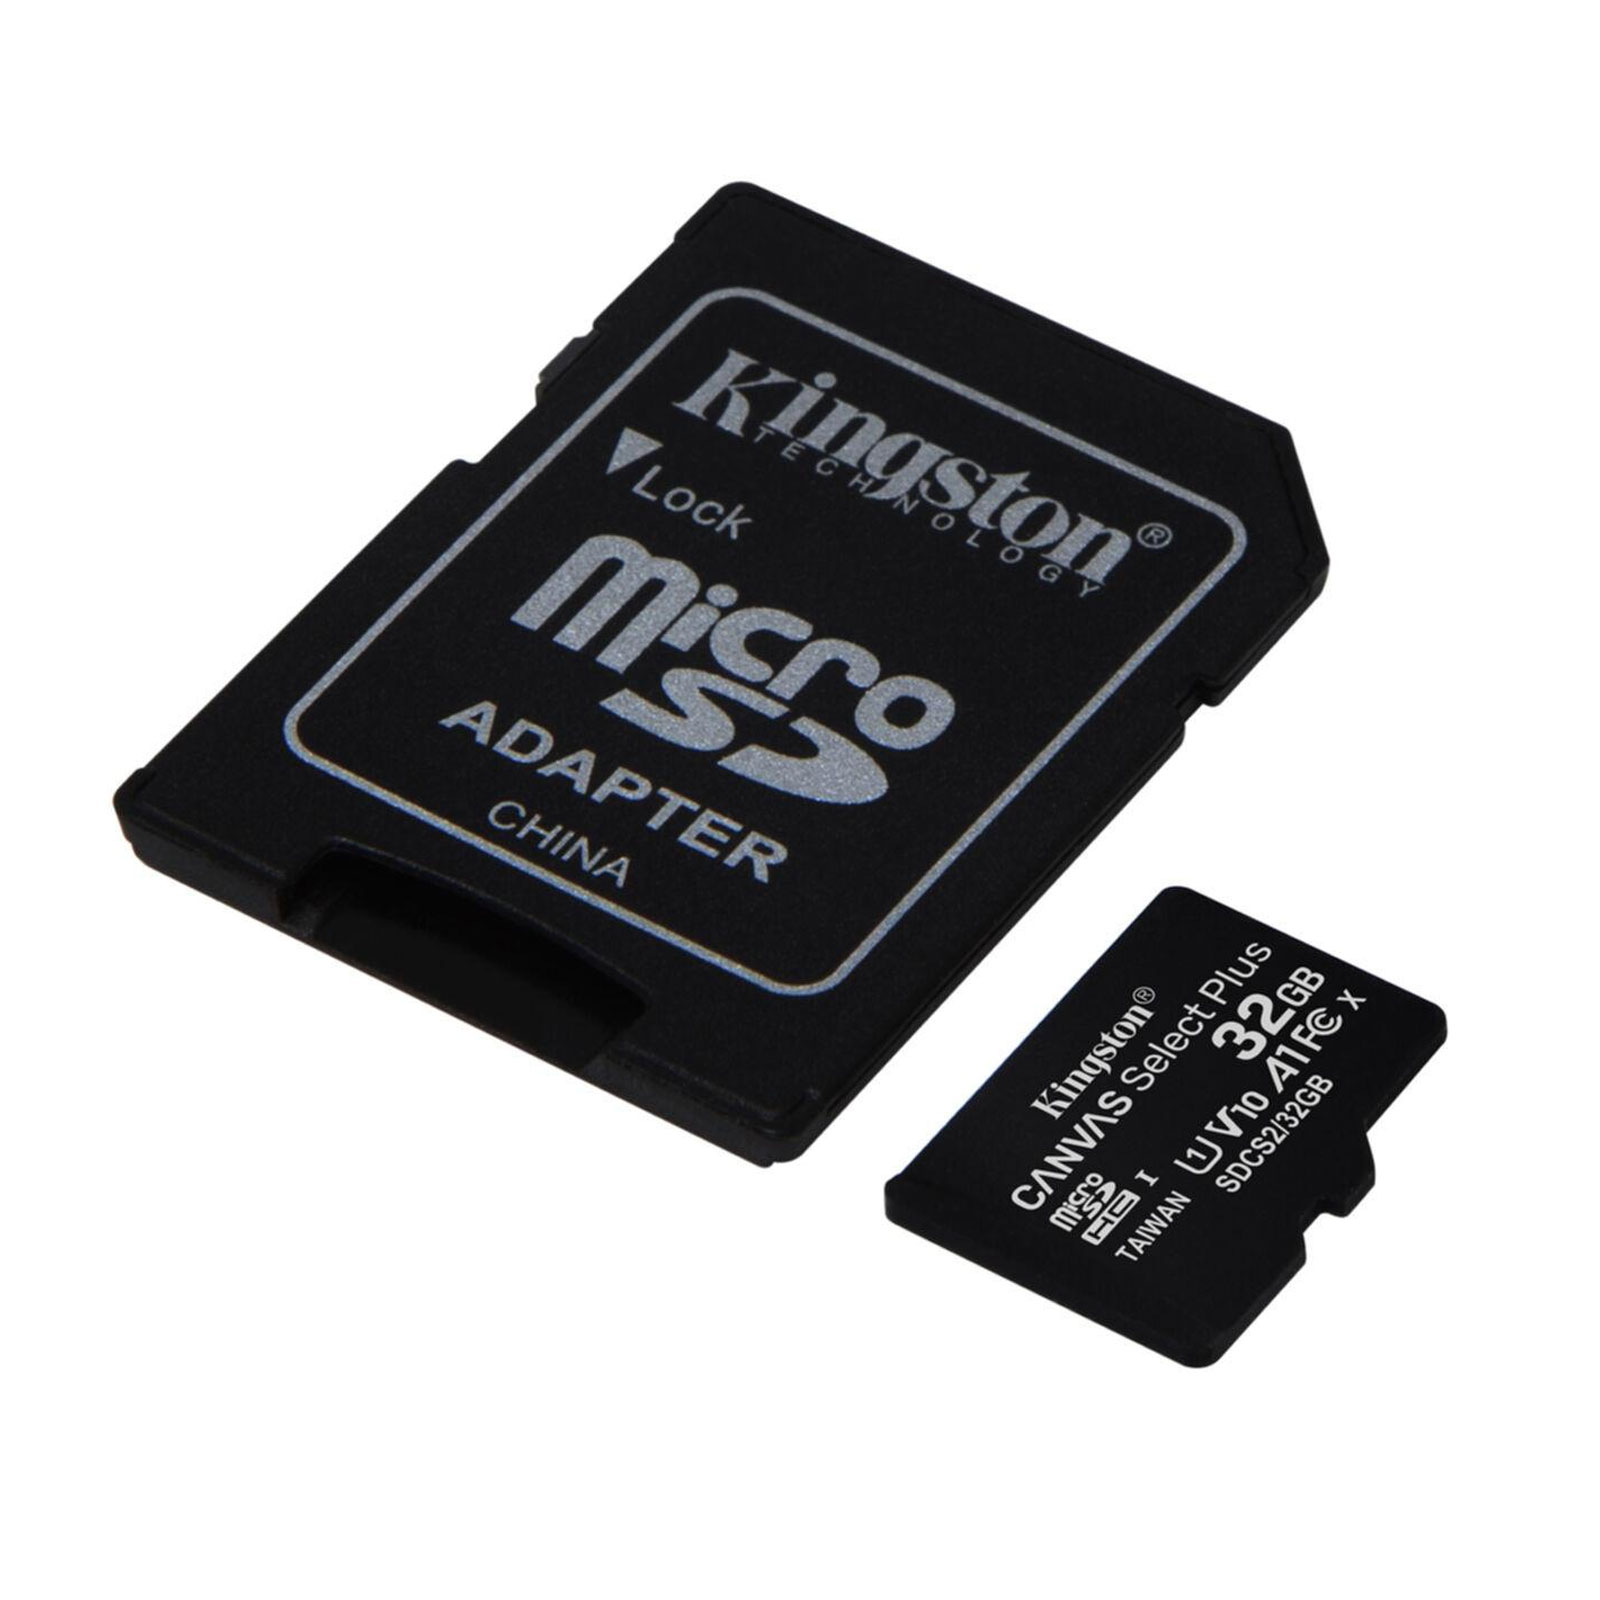 Kingston Canvas Micro SDHC 32GB Speicherkarte